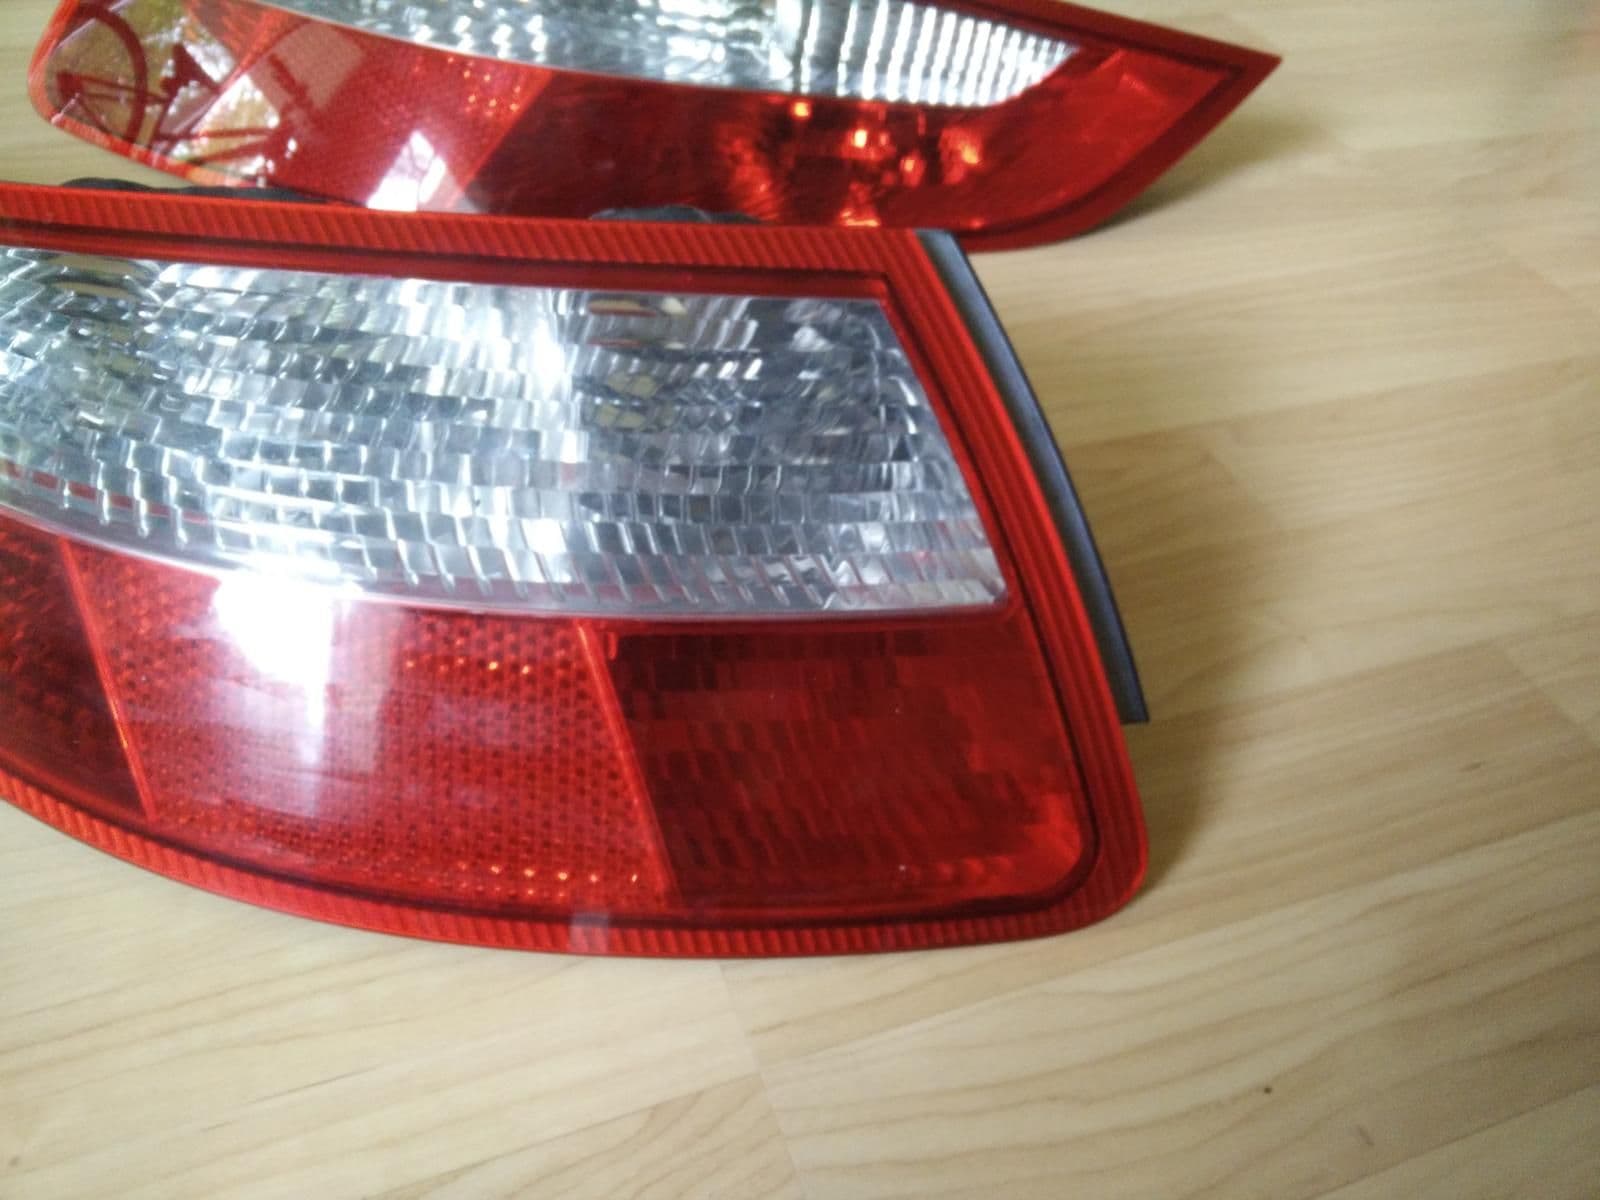 Lights - FS: Porsche 997.1 05-08 OEM Tail Lights - Used - Fargo, ND 58107, United States